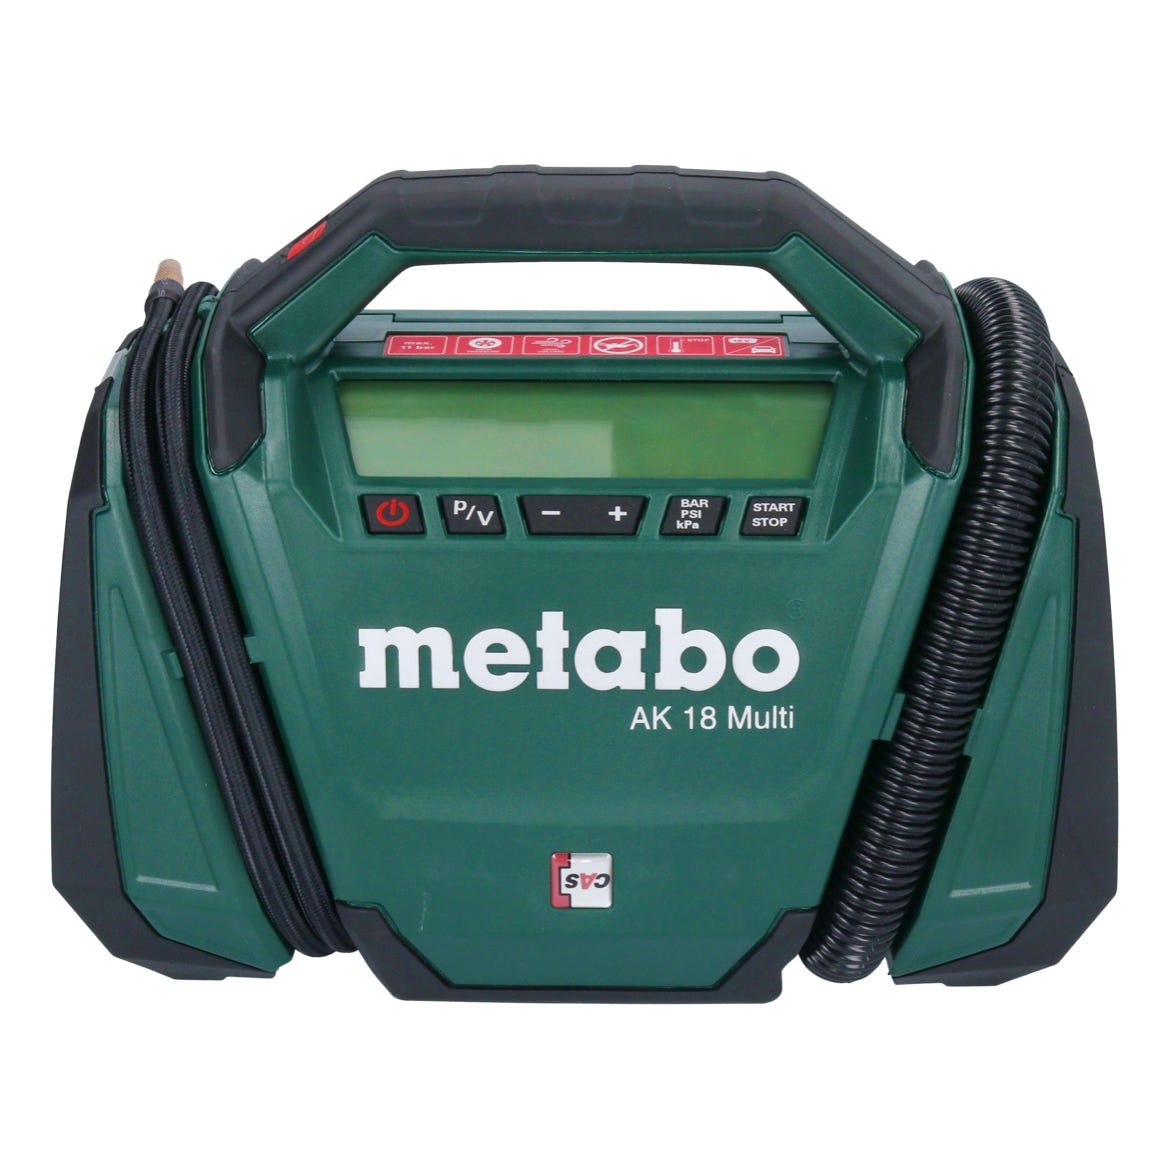 Metabo AK 18 Multi Compresseur sans fil 18 V 11 bar + 1x batterie 5,5 Ah - sans chargeur 1